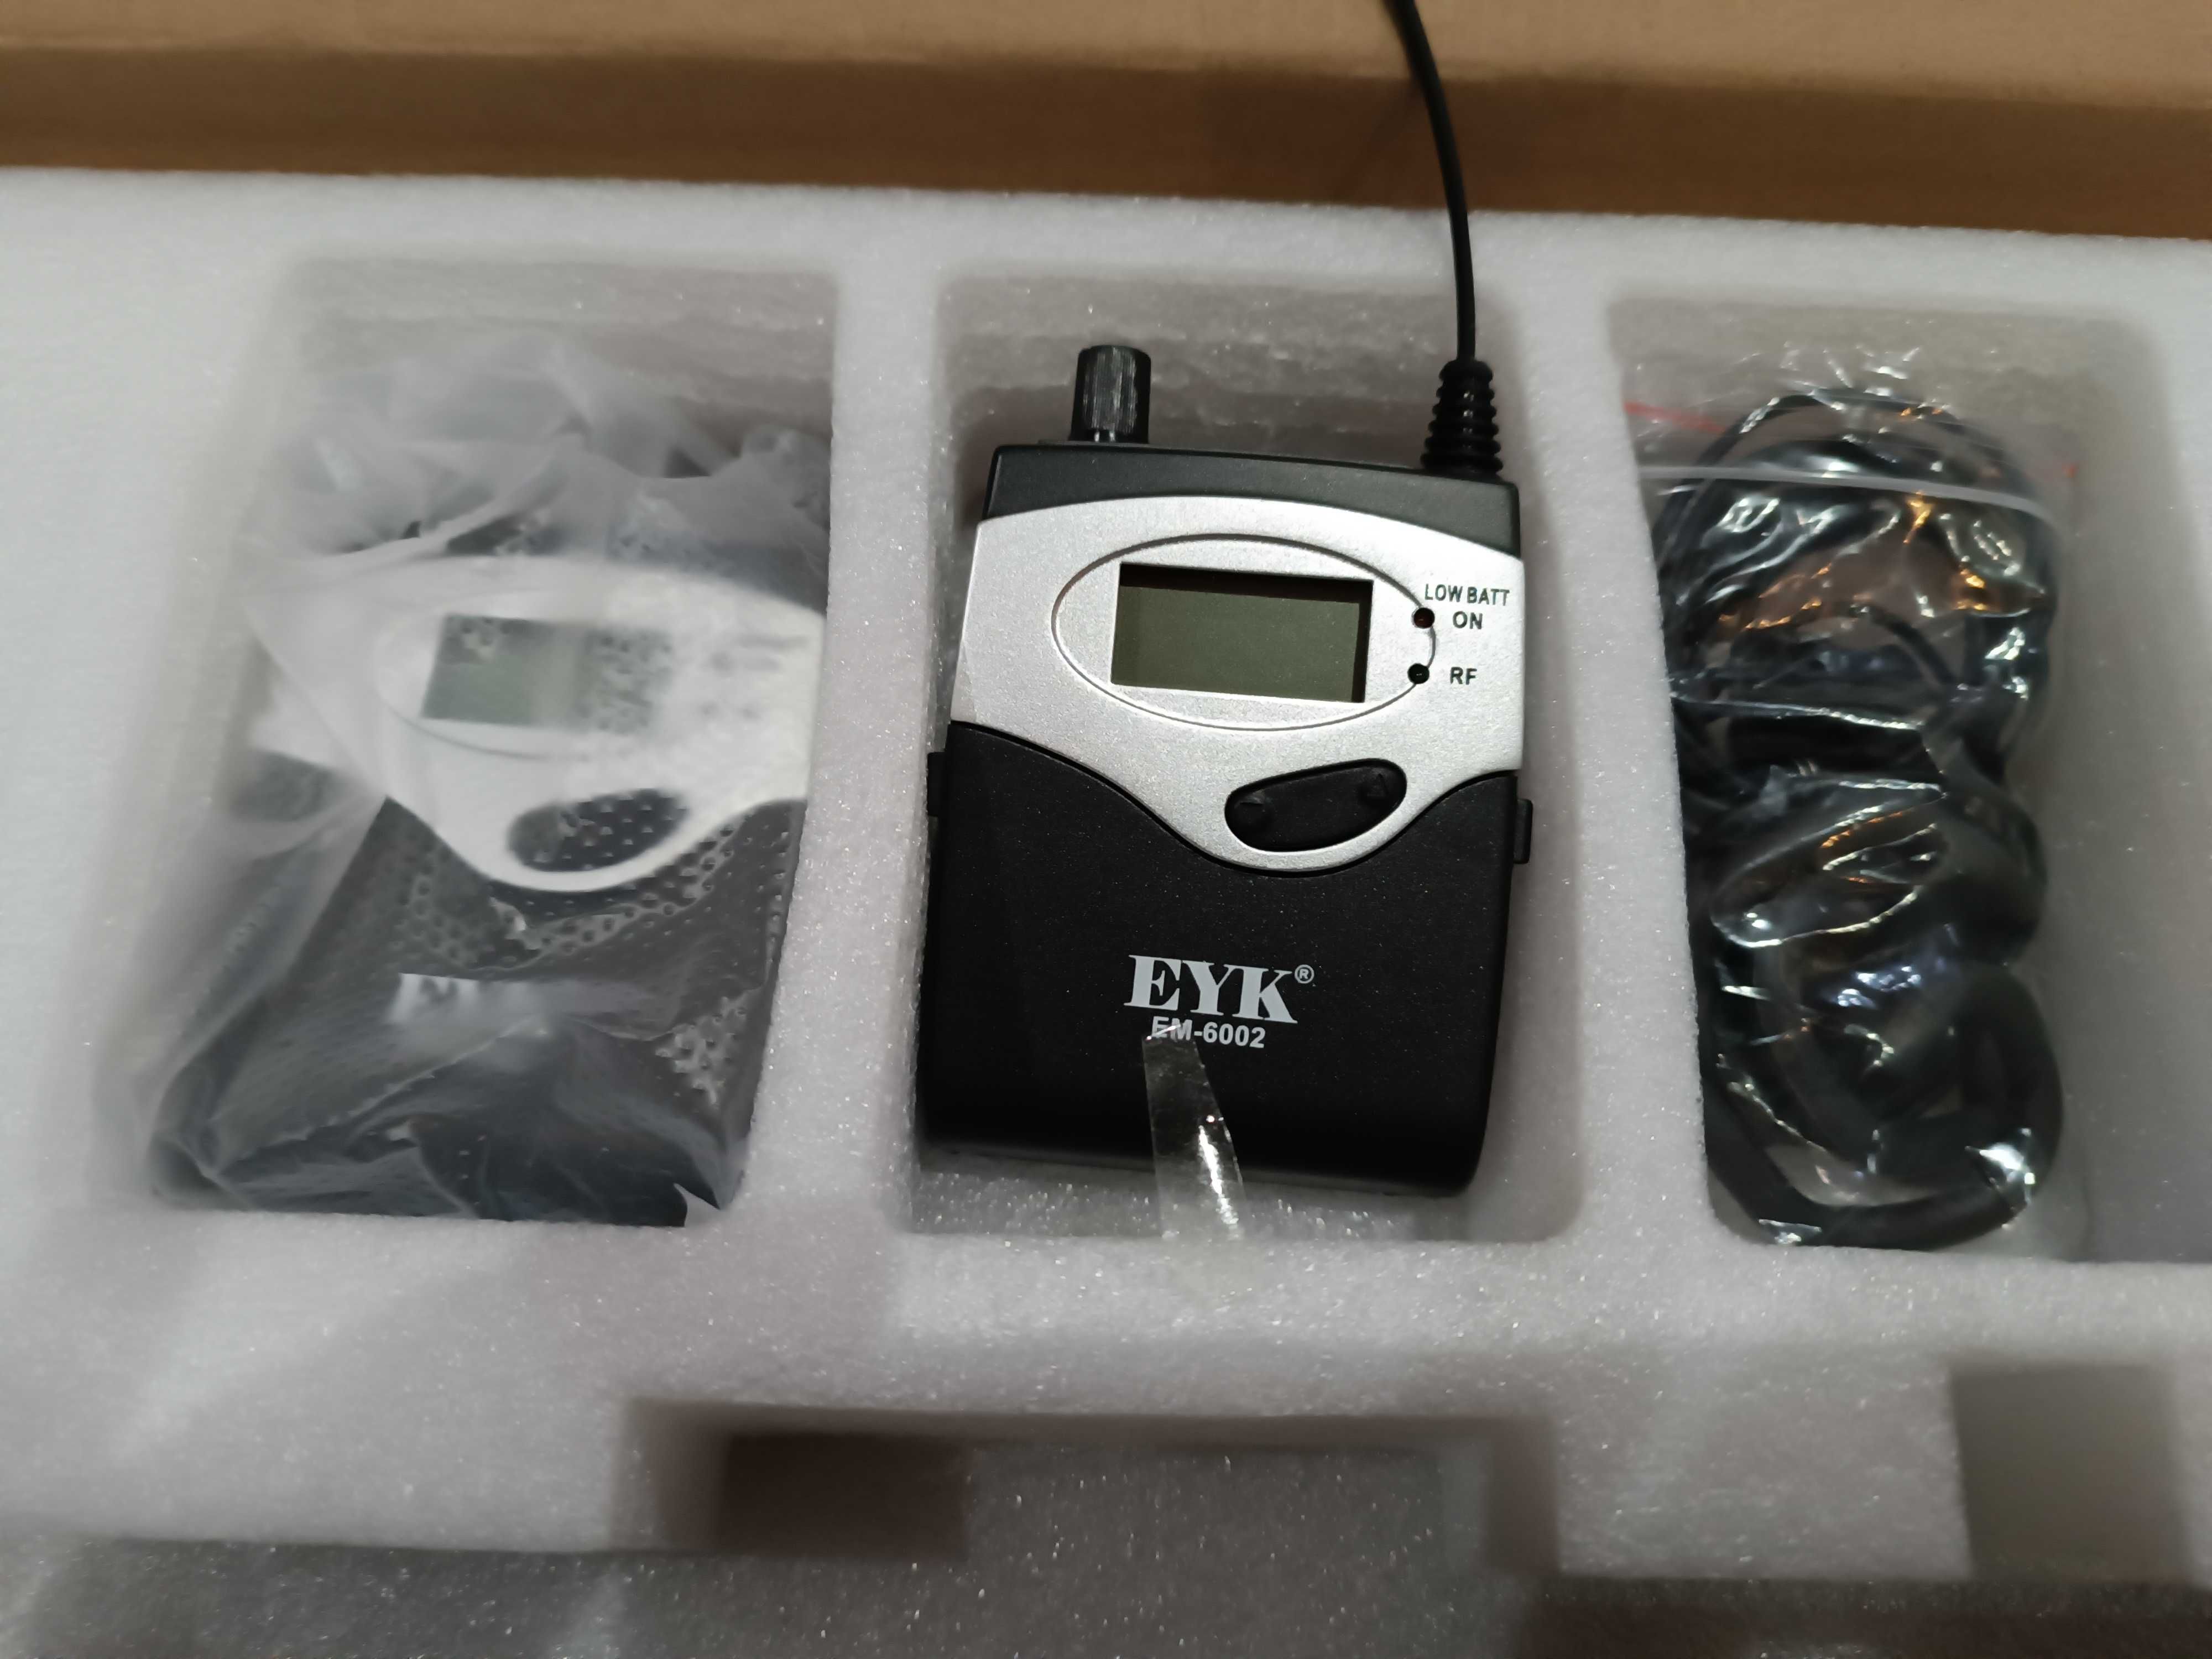 EYK EM-6002 System monitorowania dousznego